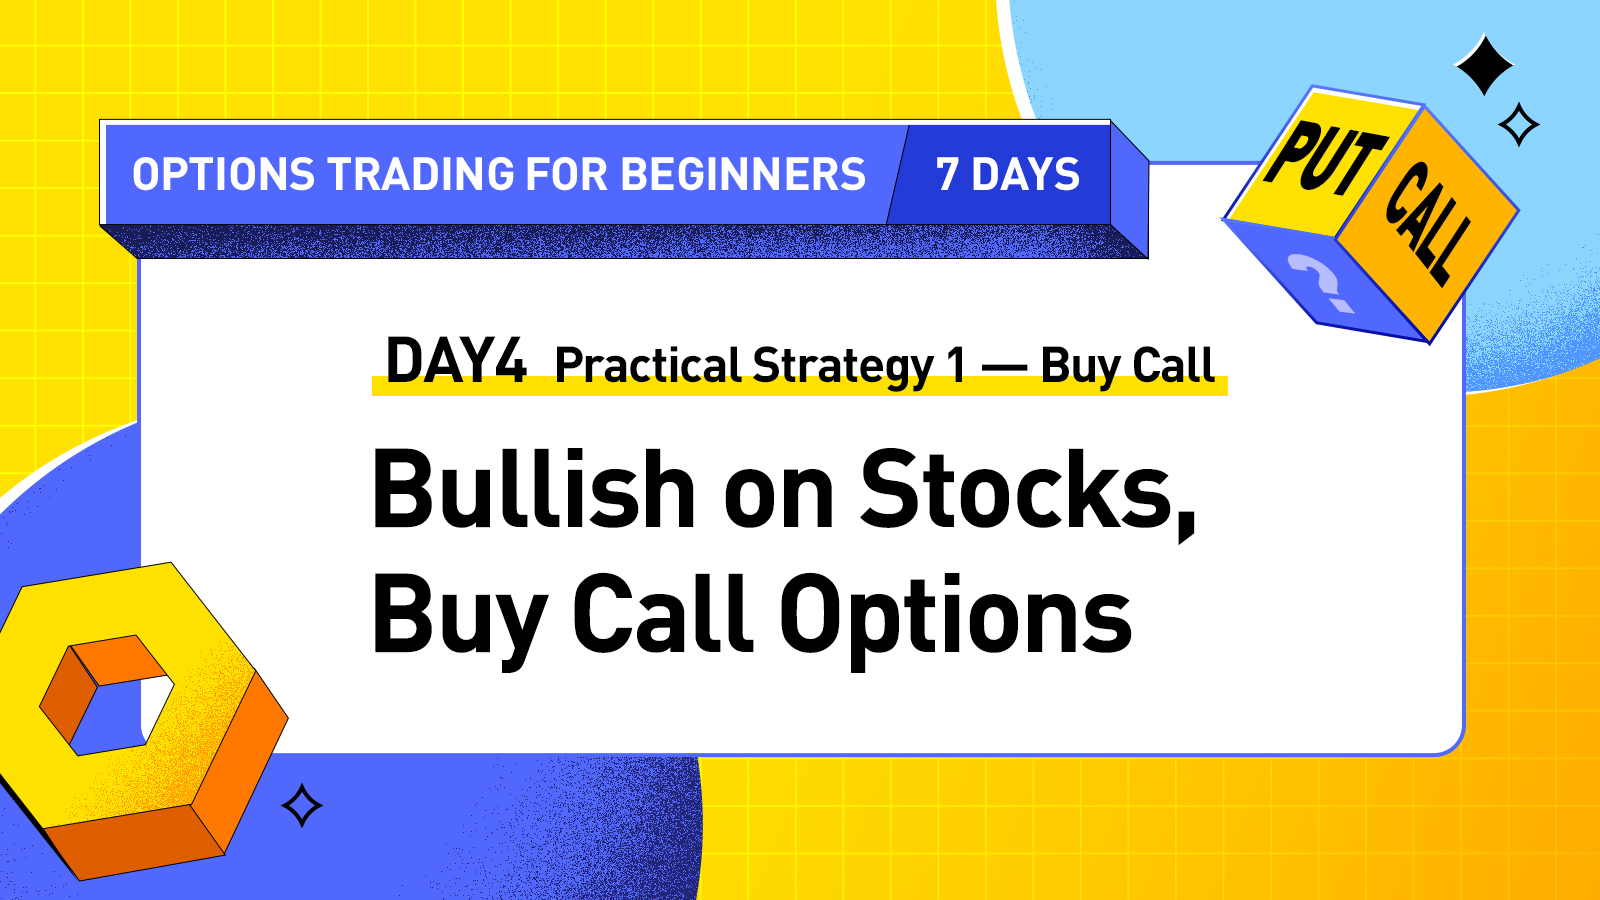 DAY4- Practical Strategy 1: Bullish on Stocks, Buy Call Options (Buy Call)